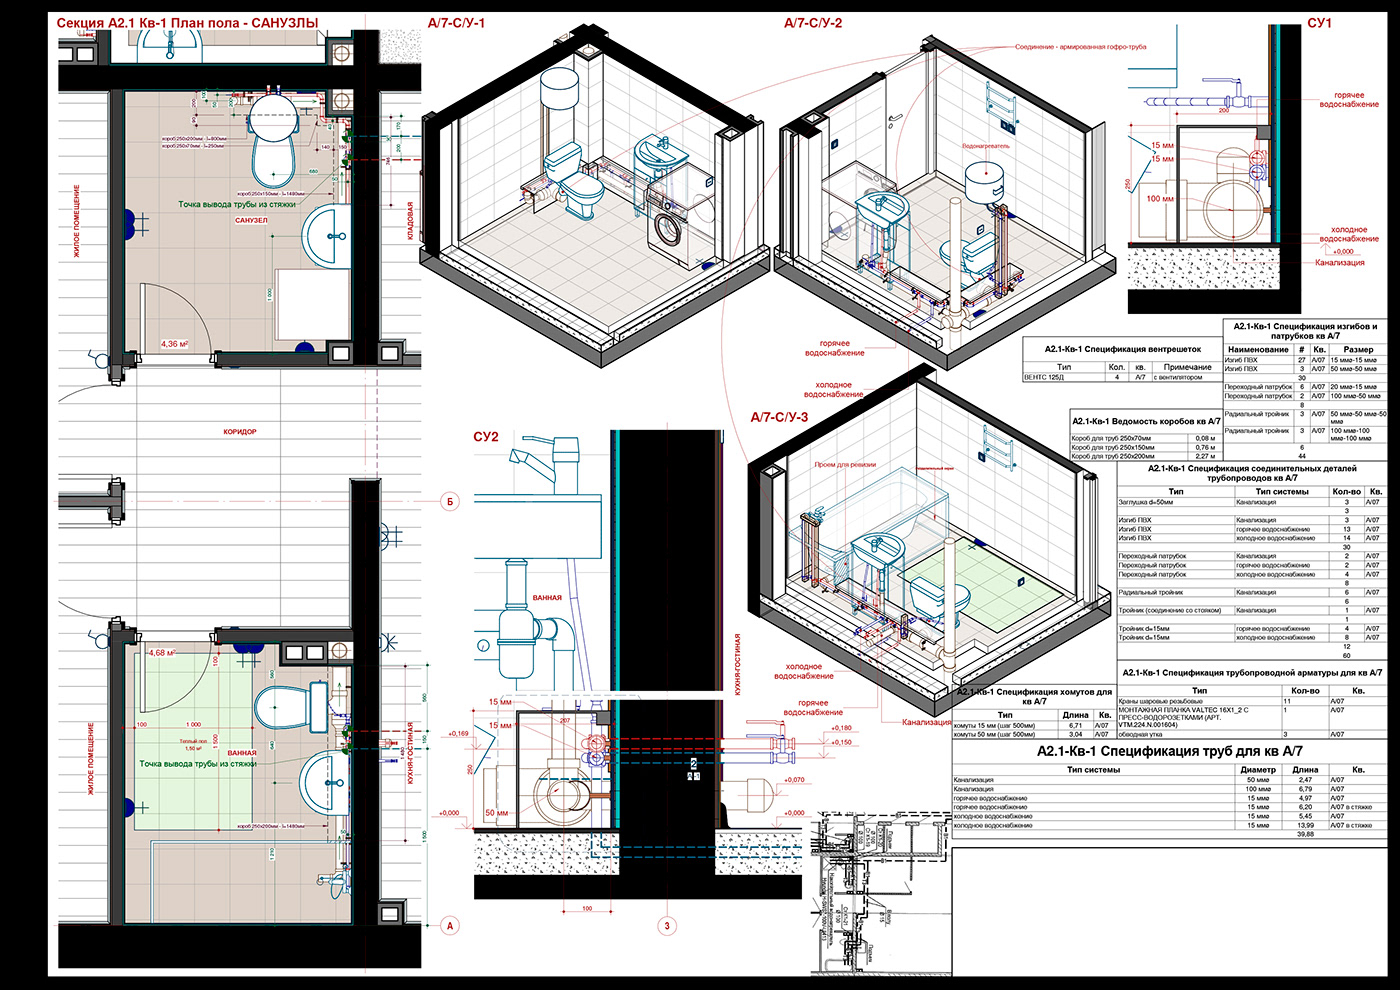 drawings revit architecture design interior design  3d modeling visualization 3D cad